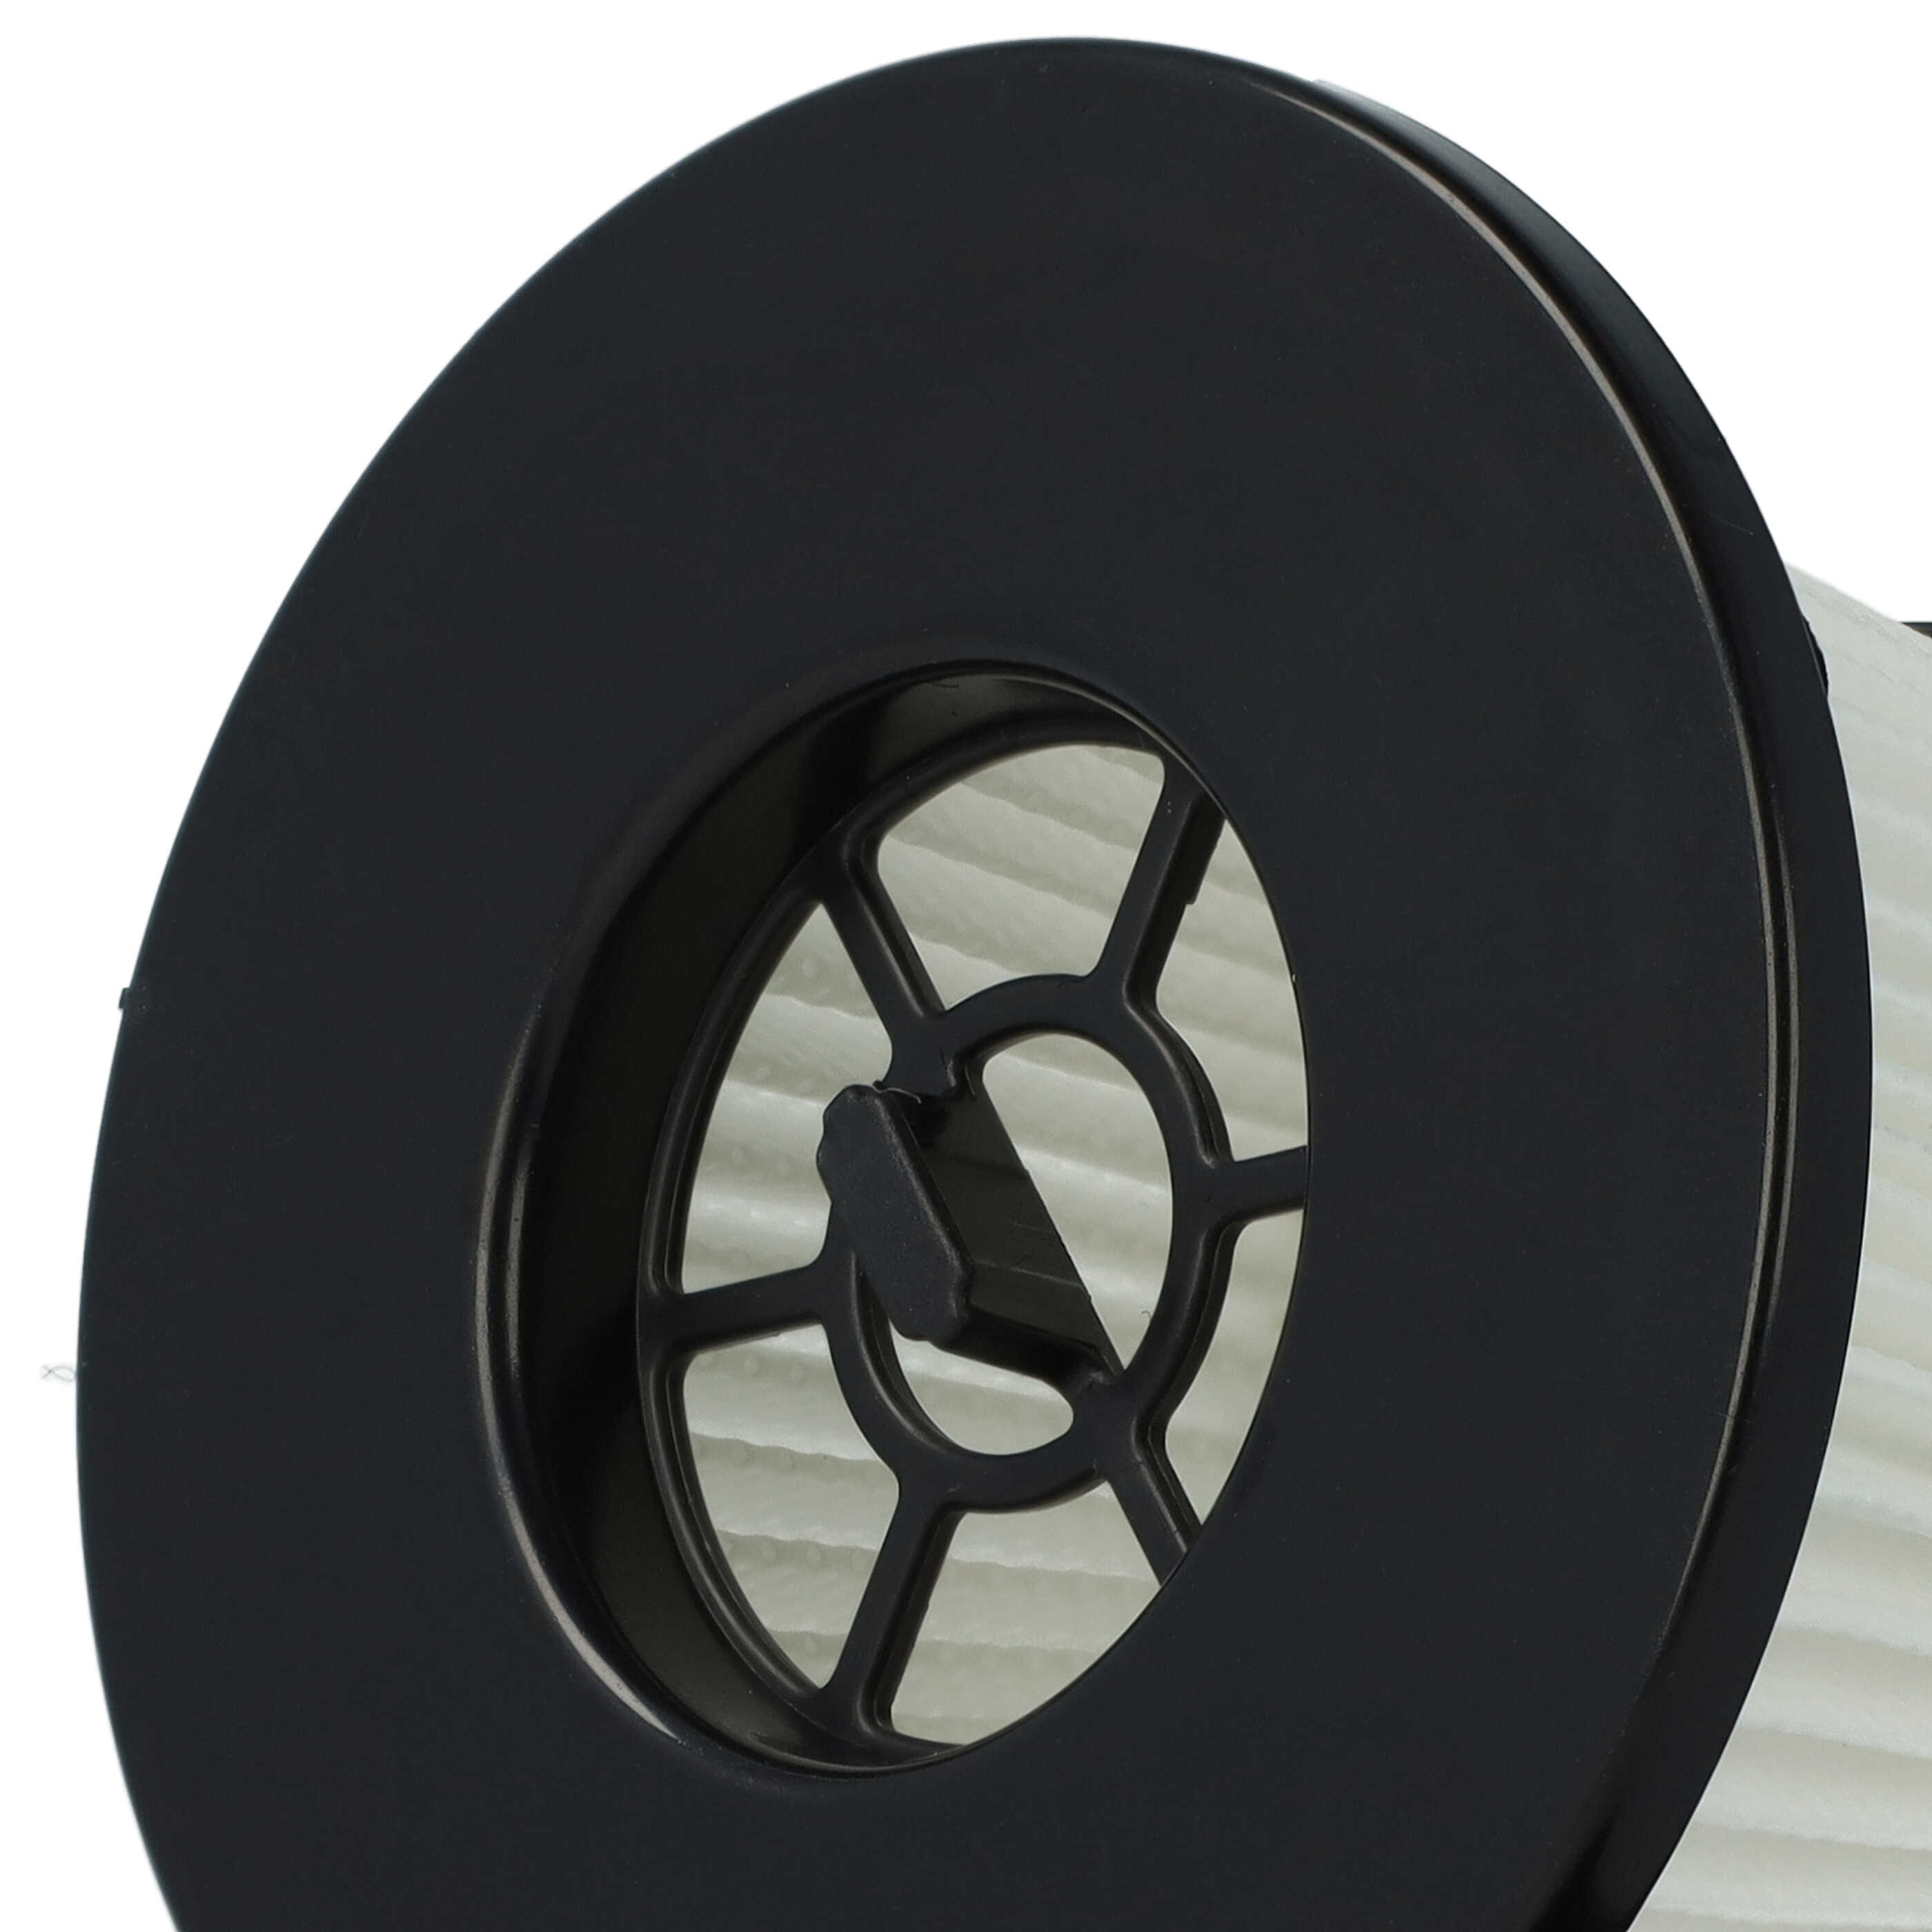 3x HEPA filter suitable for Moosoo K24 Vacuum Cleaner, filter class E10